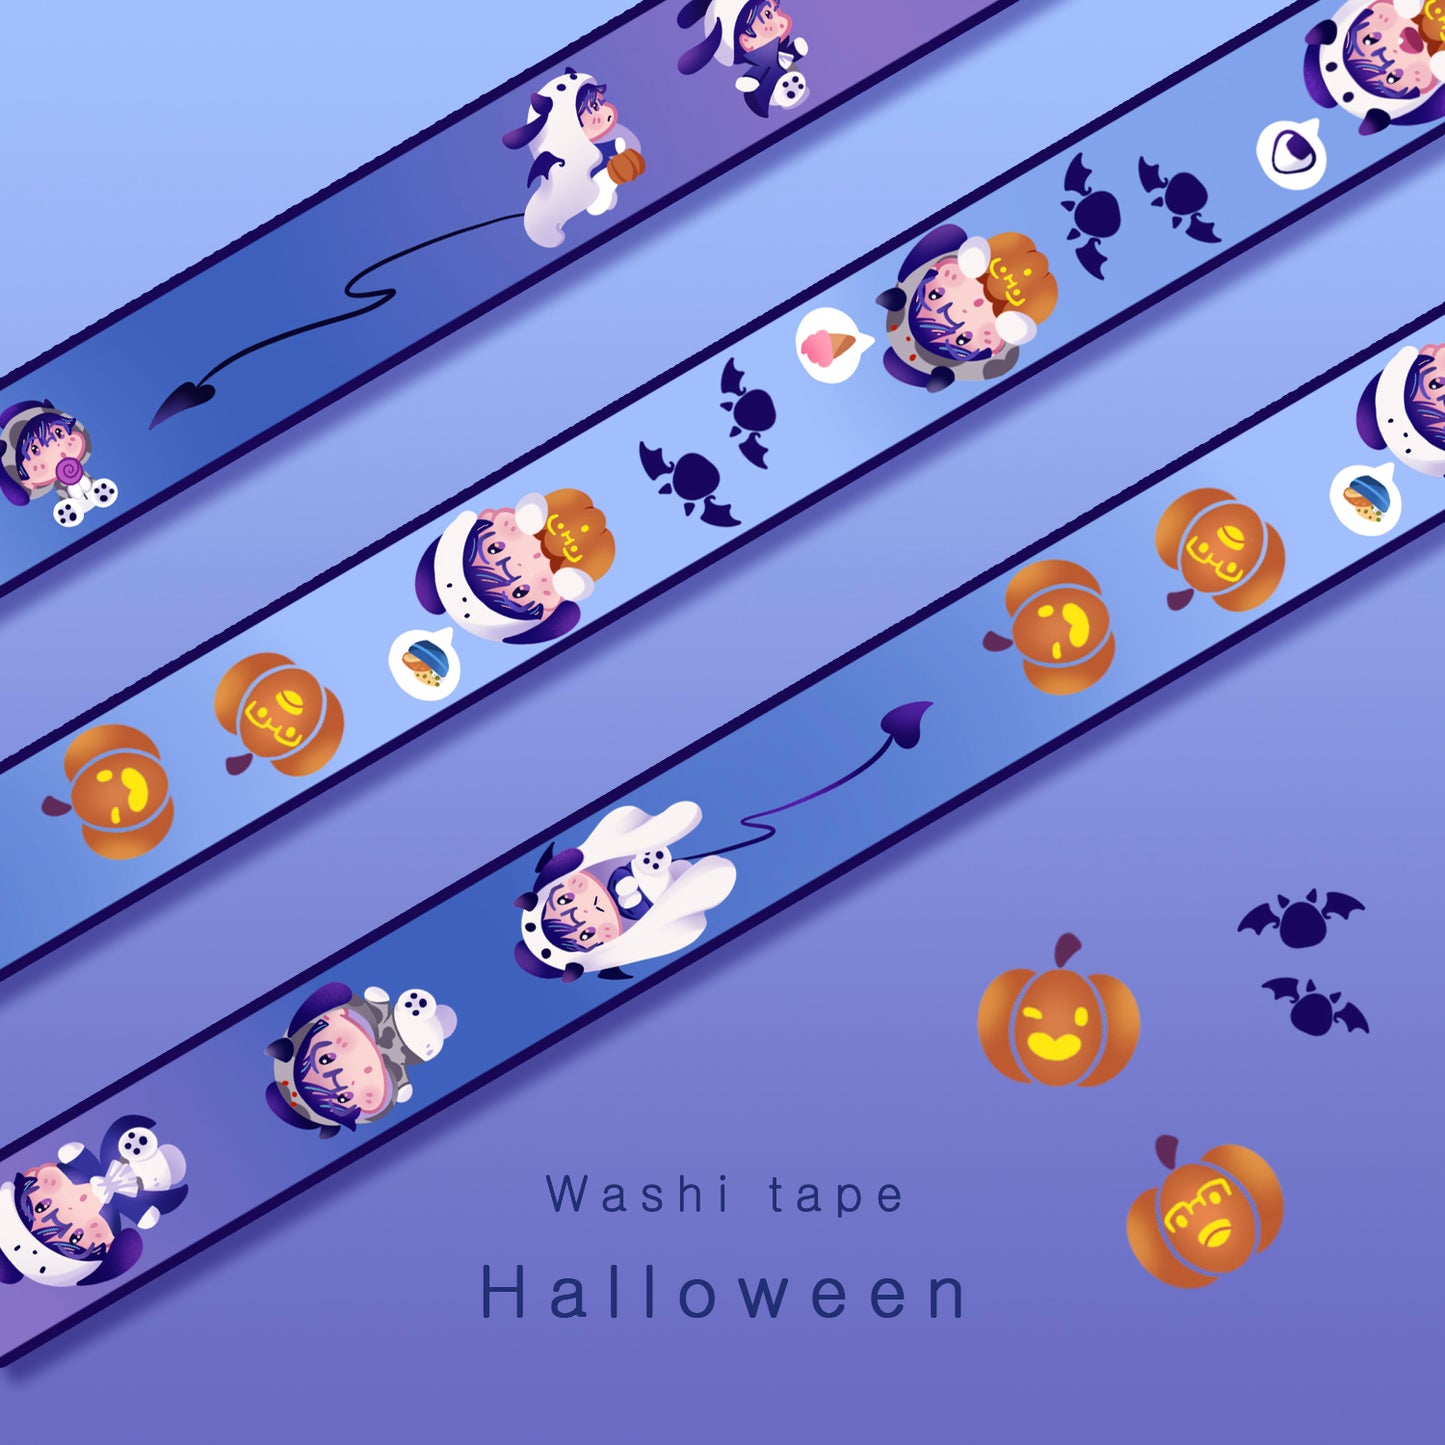 [Yuri!!! on Ice] Halloween - Washi tape